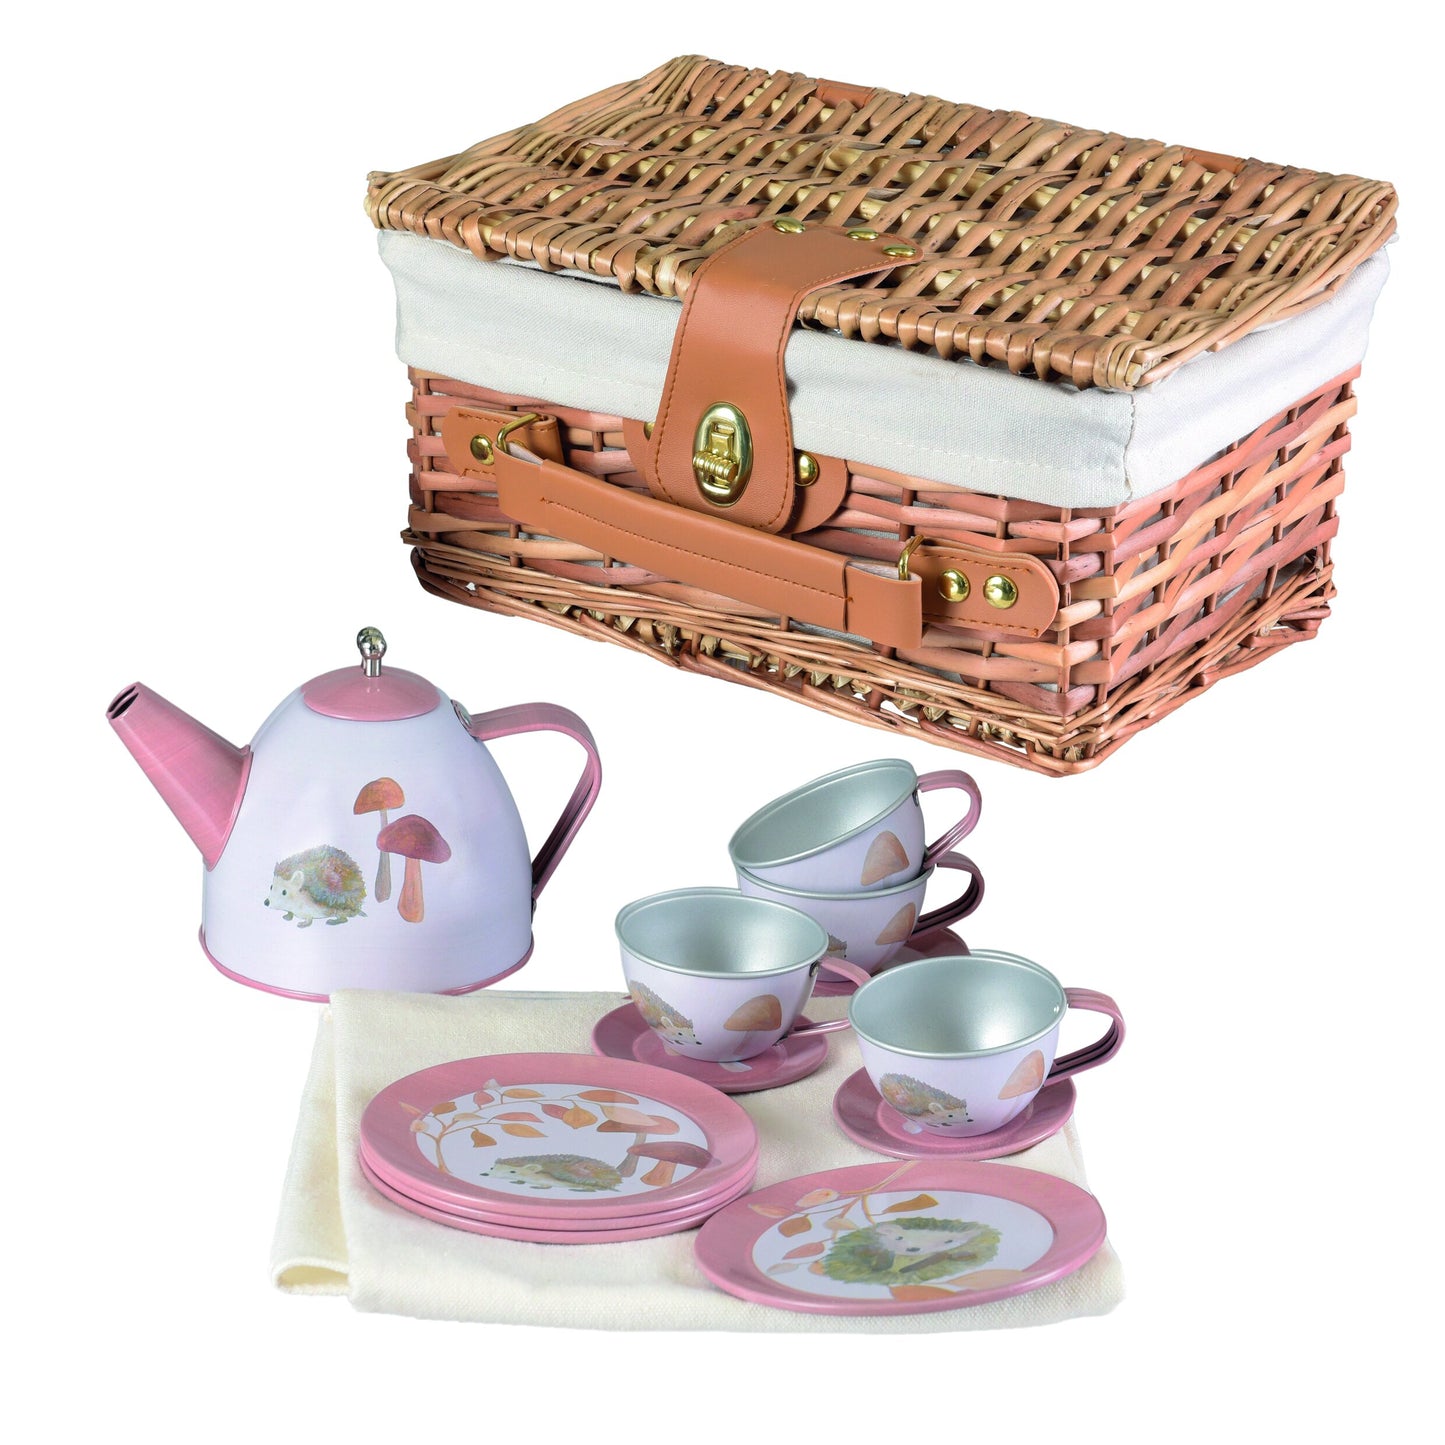 Hedgehog Tin Tea Set displayed next to a wicker basket